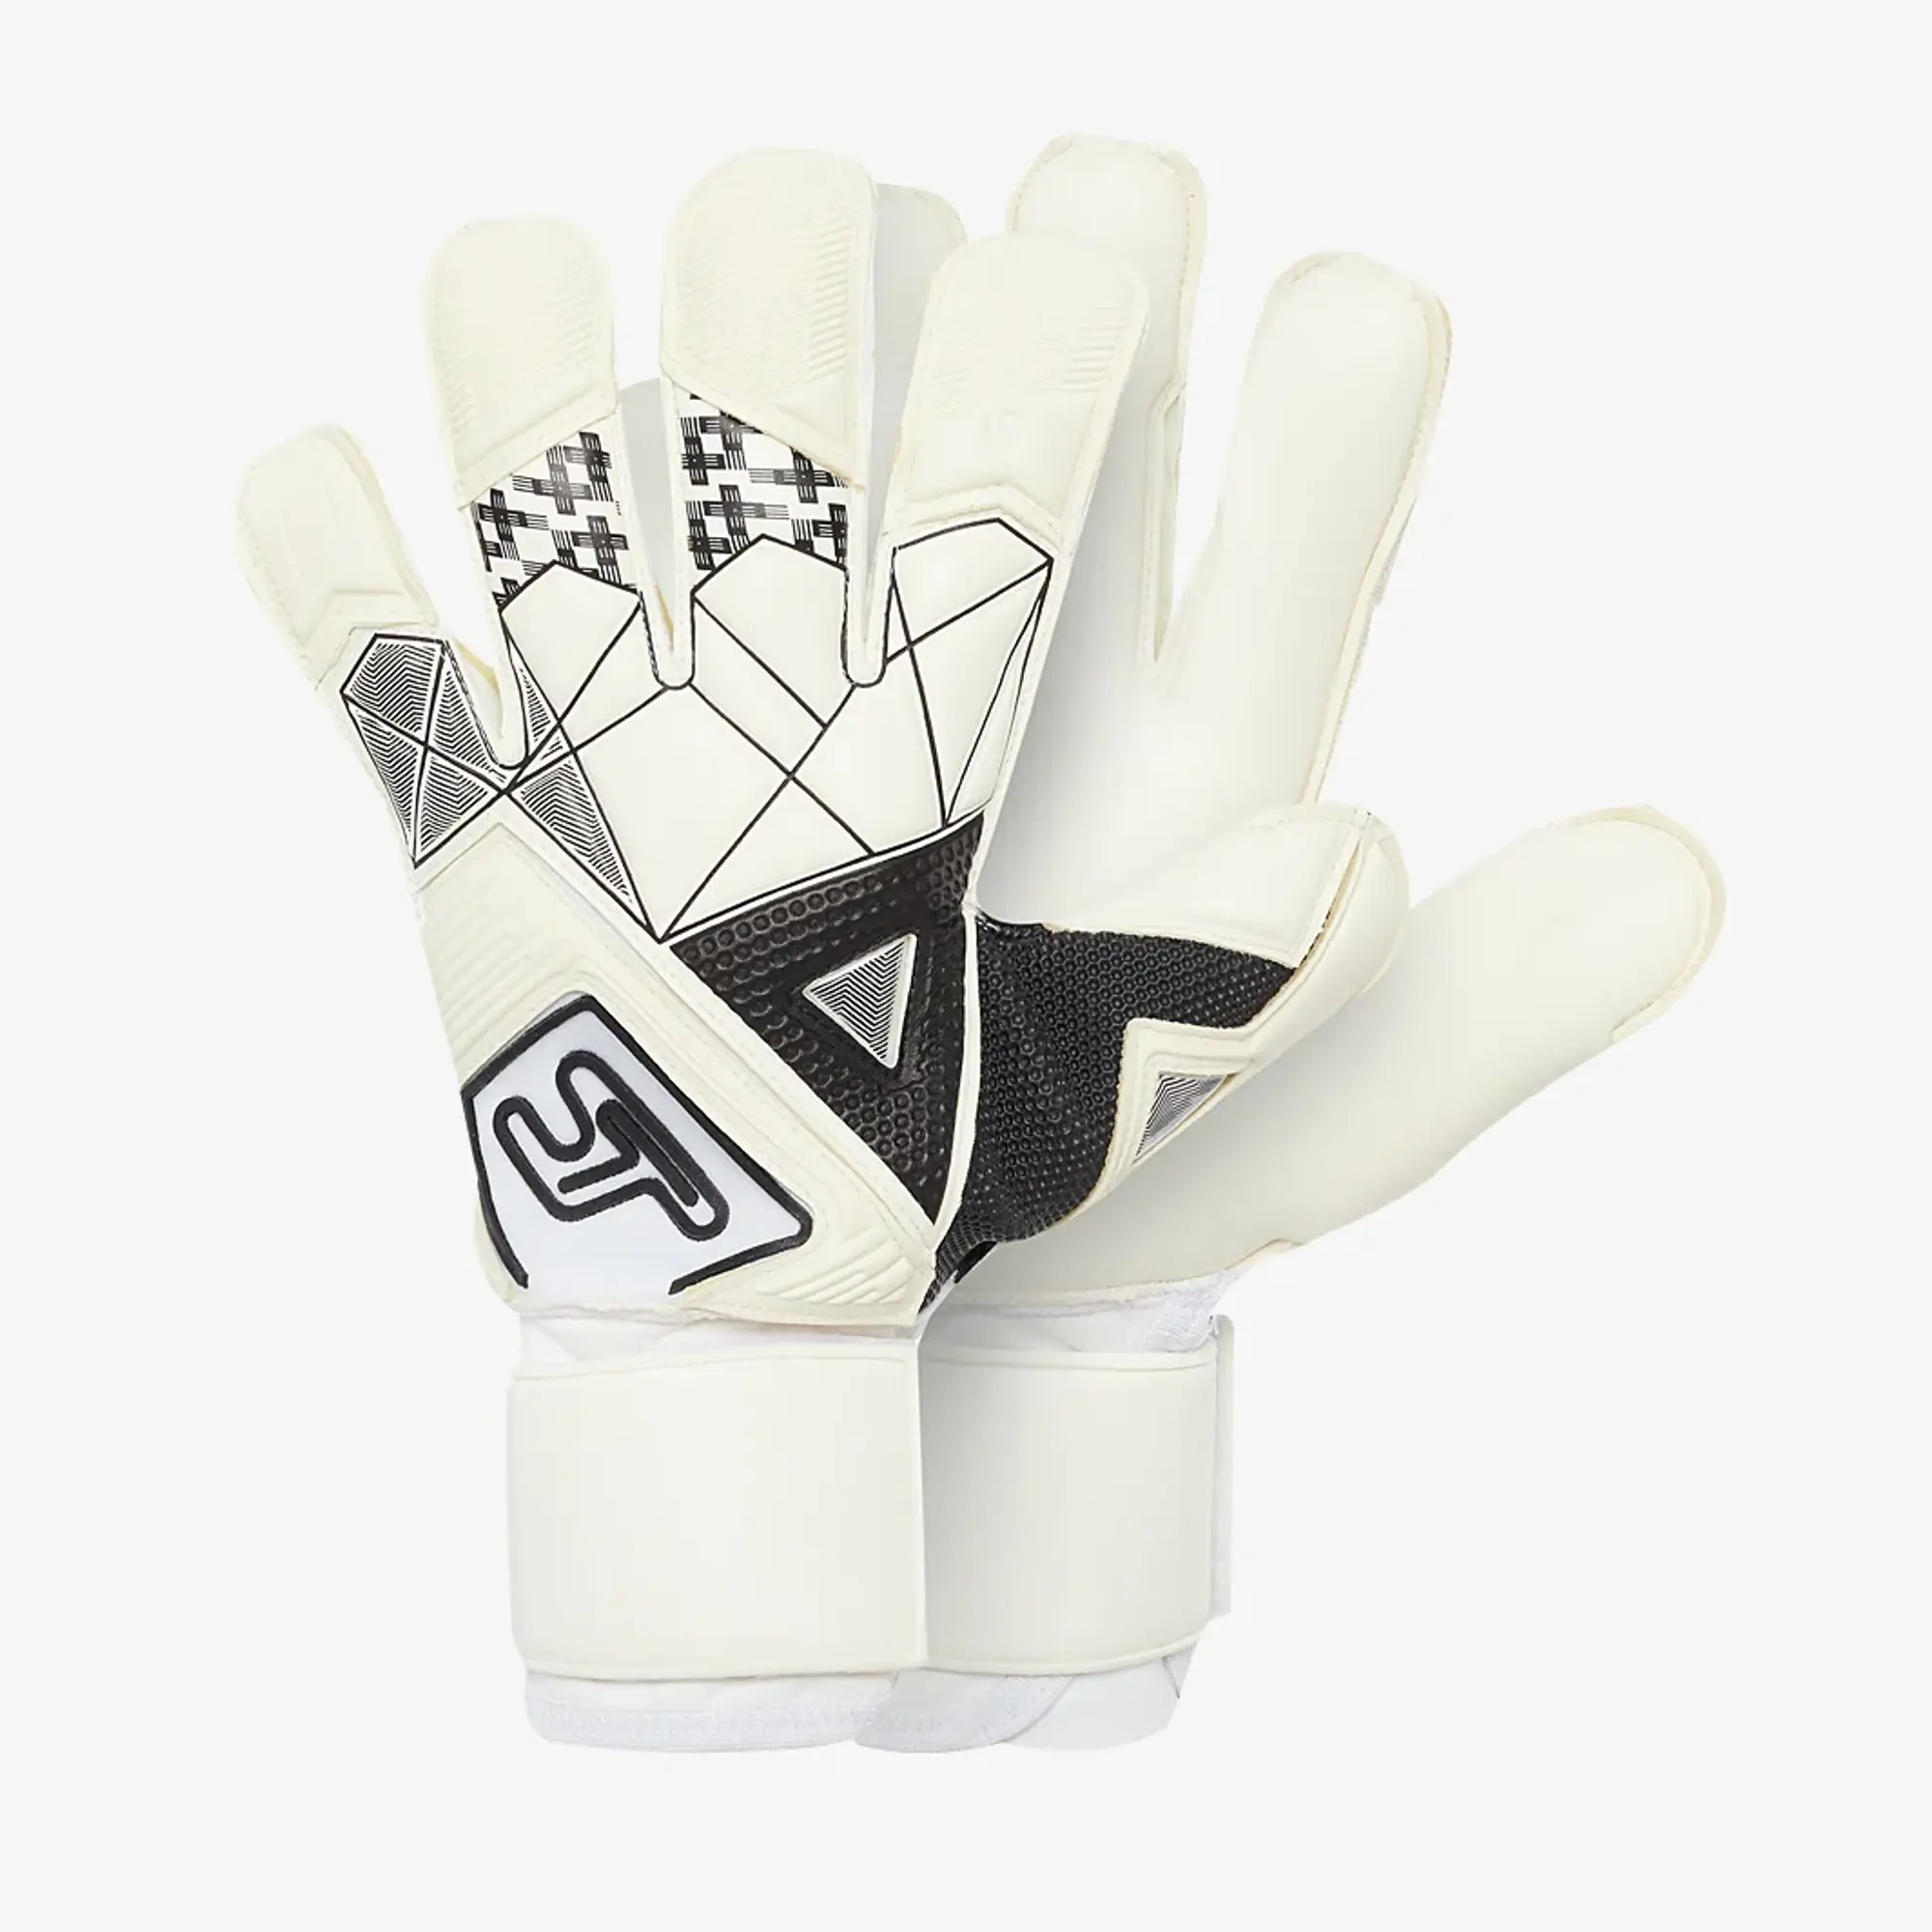 Sells Total Contact Comp Xc Hybrid Jr Pro Strap Goalkeeper Gloves